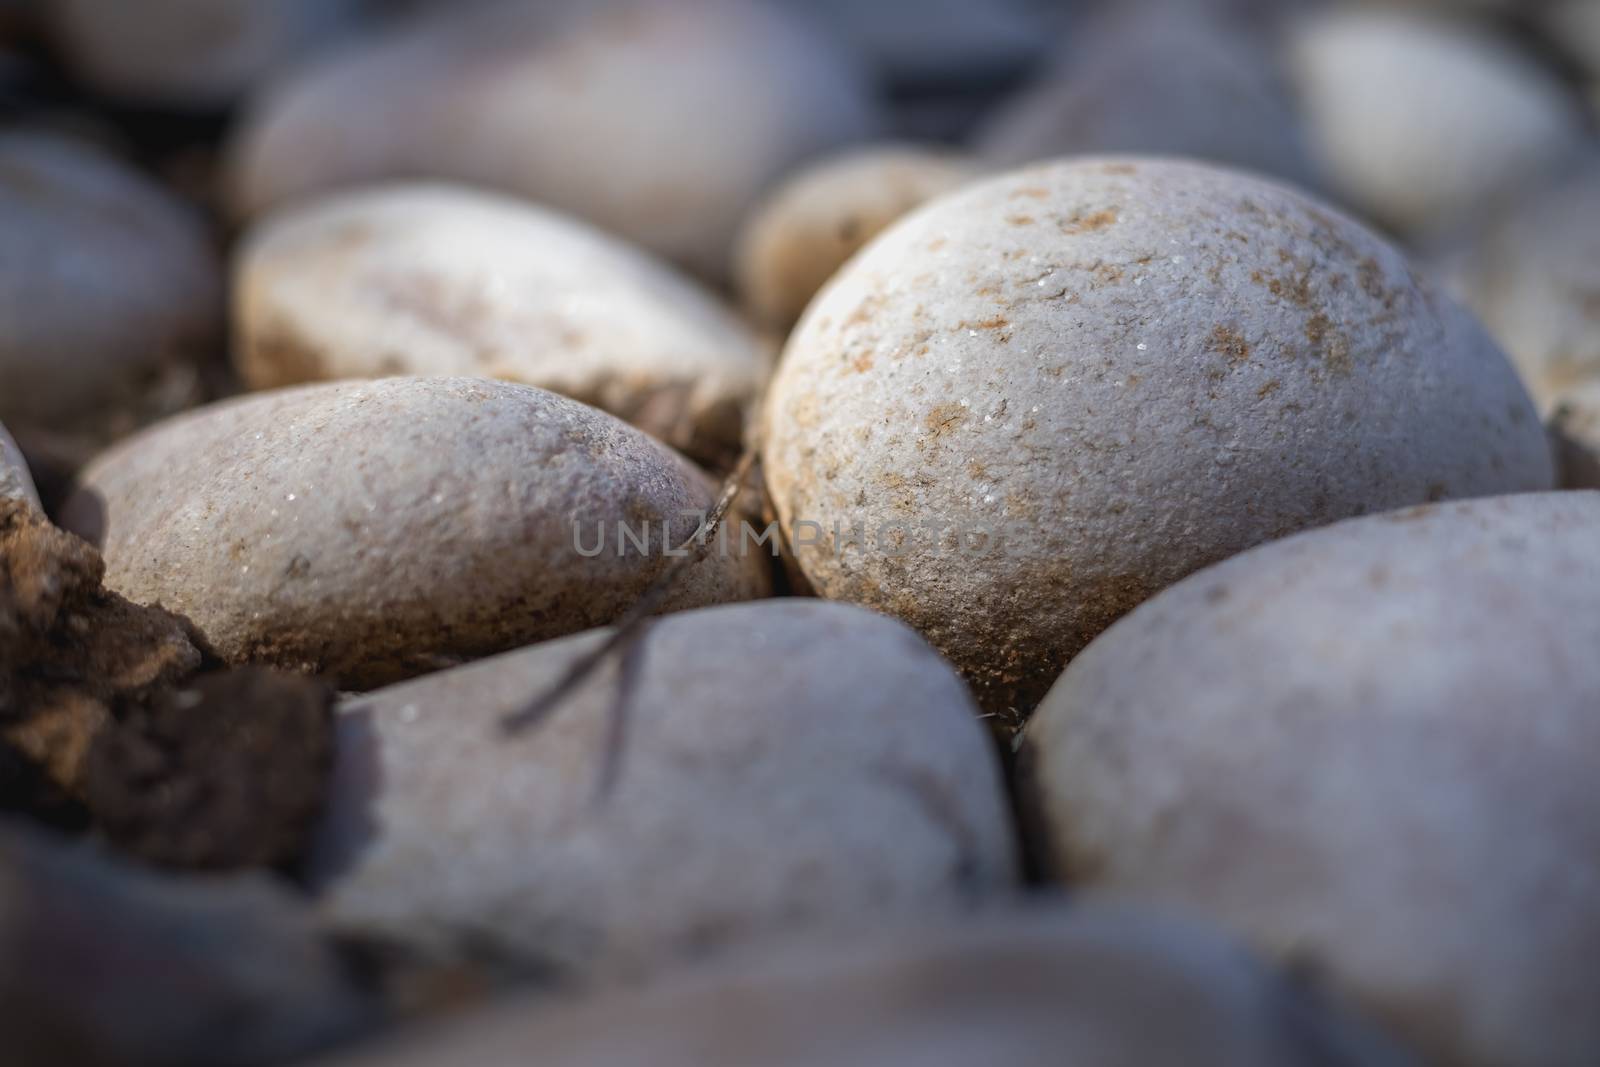 gray beach pebble in the ground in garden by AtlanticEUROSTOXX